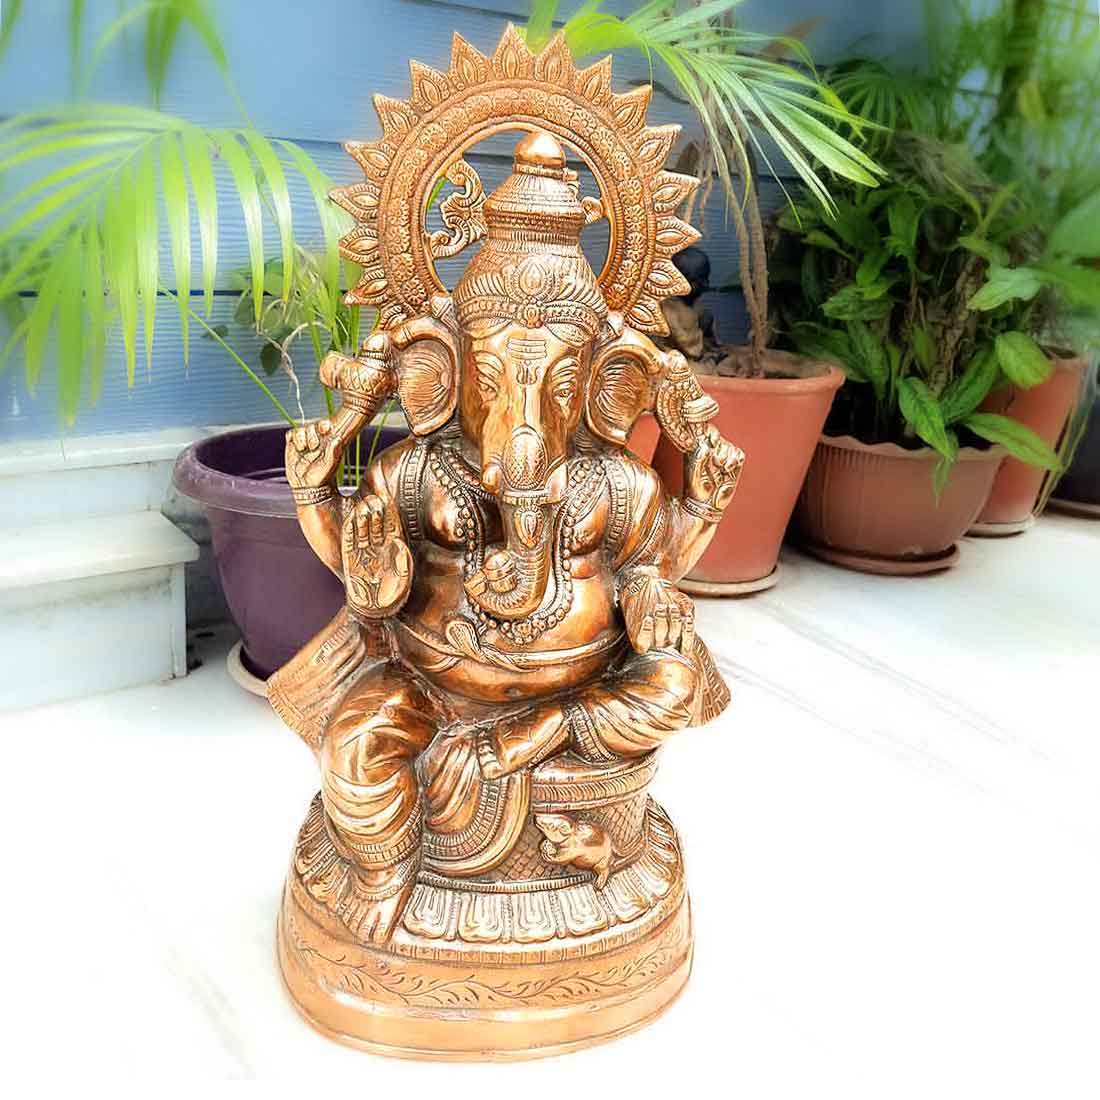 Ganesh Statues and Idols